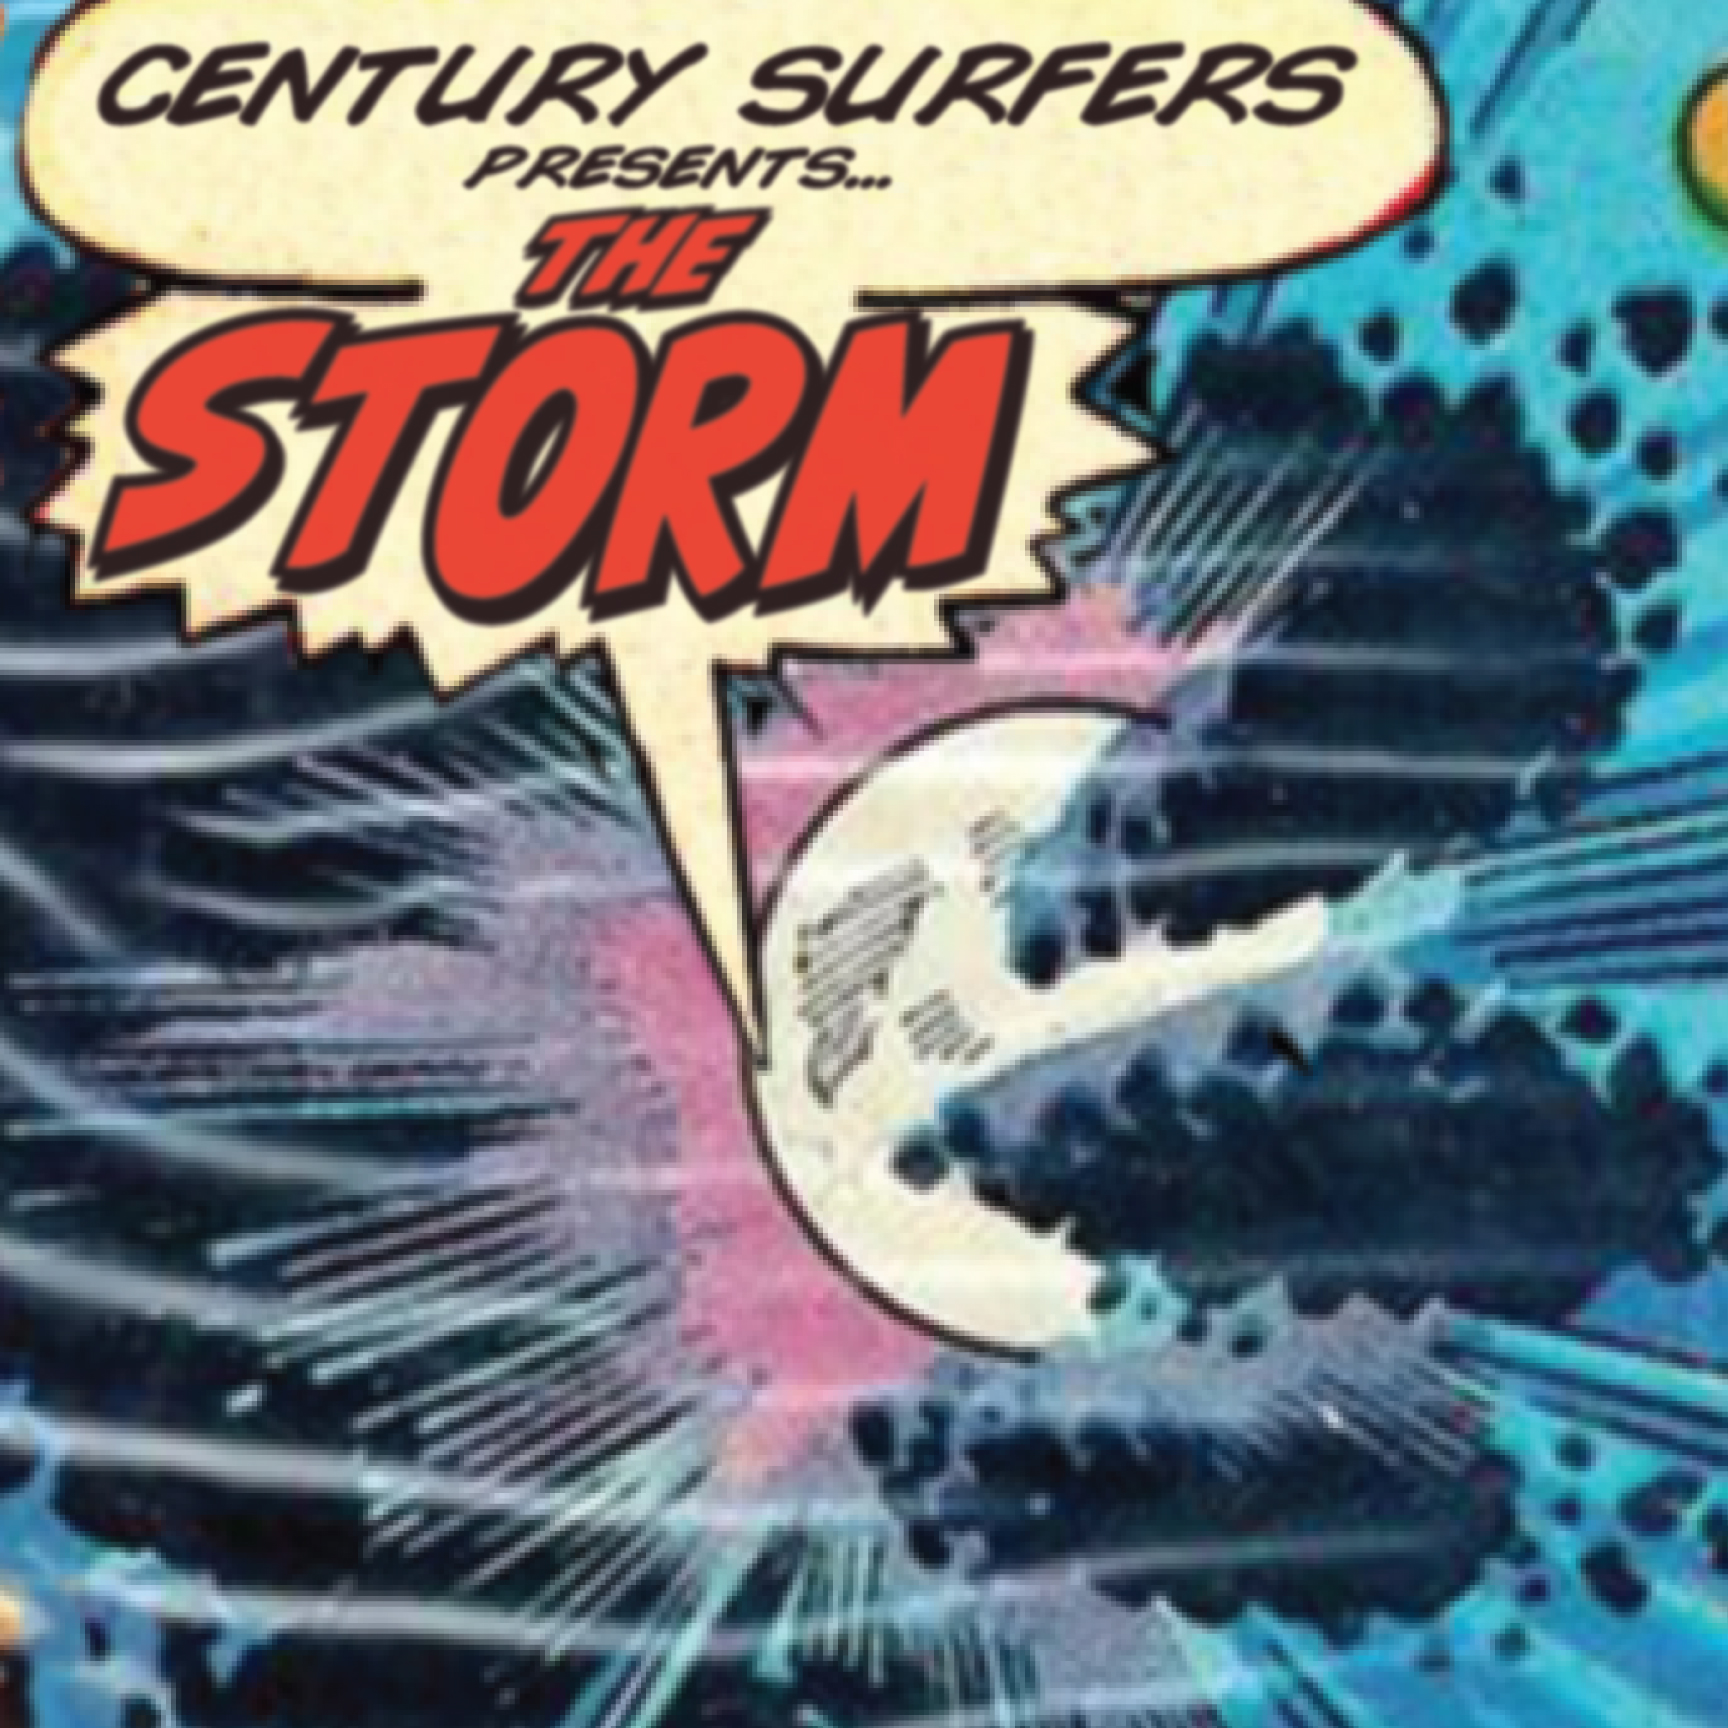 Century Surfers Presents The Storm